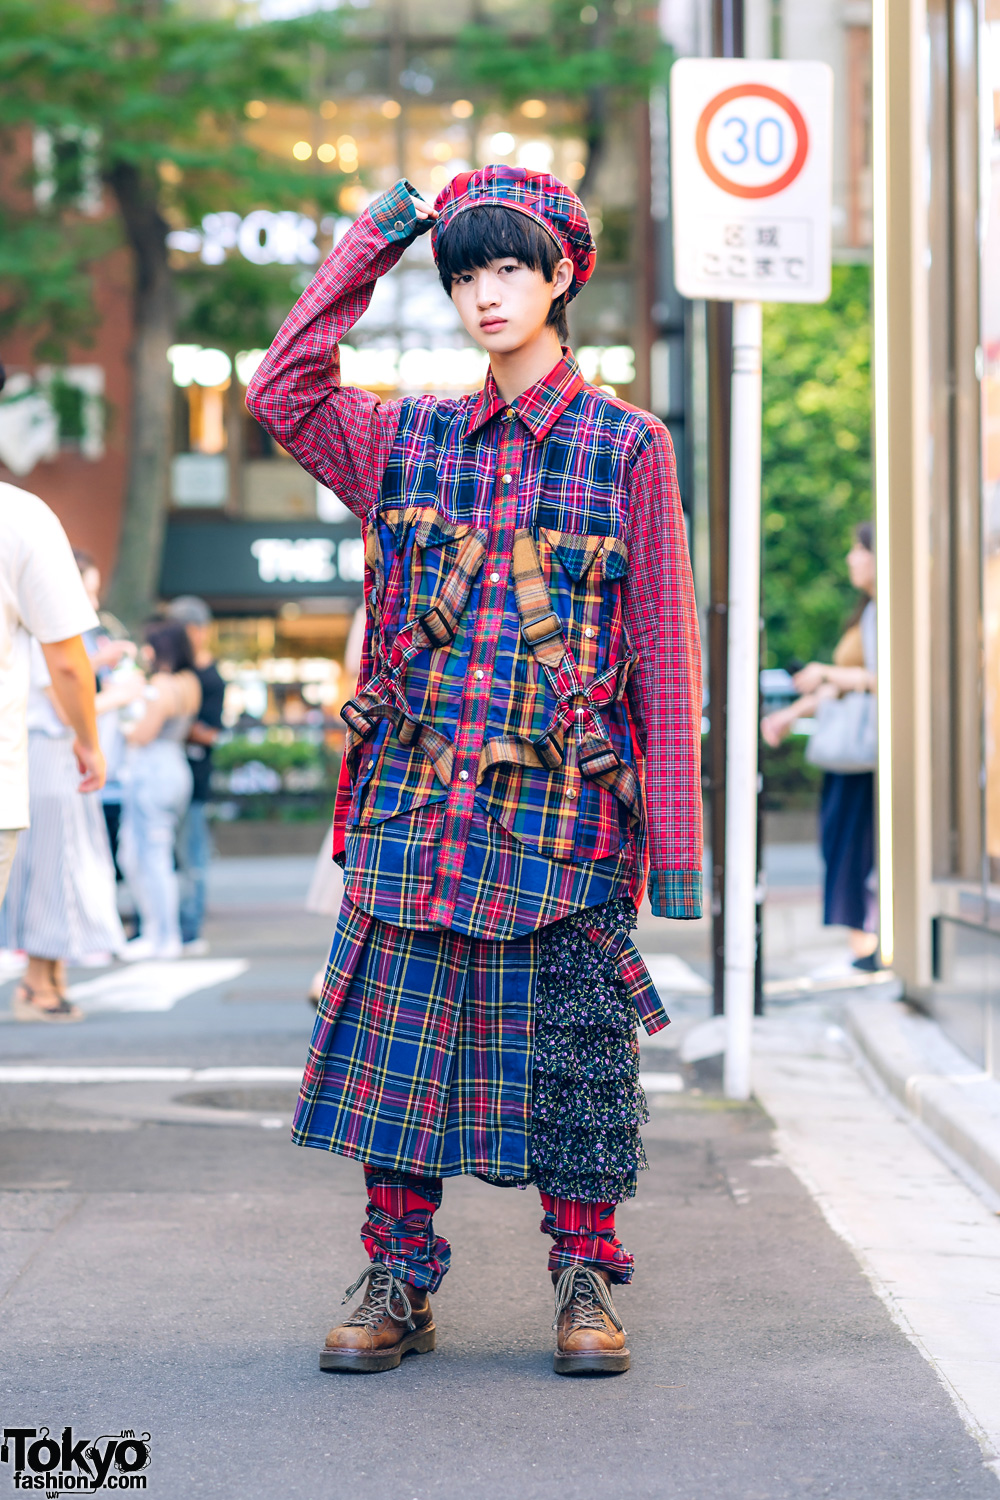 HEIHEI Japan Street Style w/ Plaid Beret, Multi-Plaid Harness Shirt, Skirt Over Pants & Dr. Martens Boots